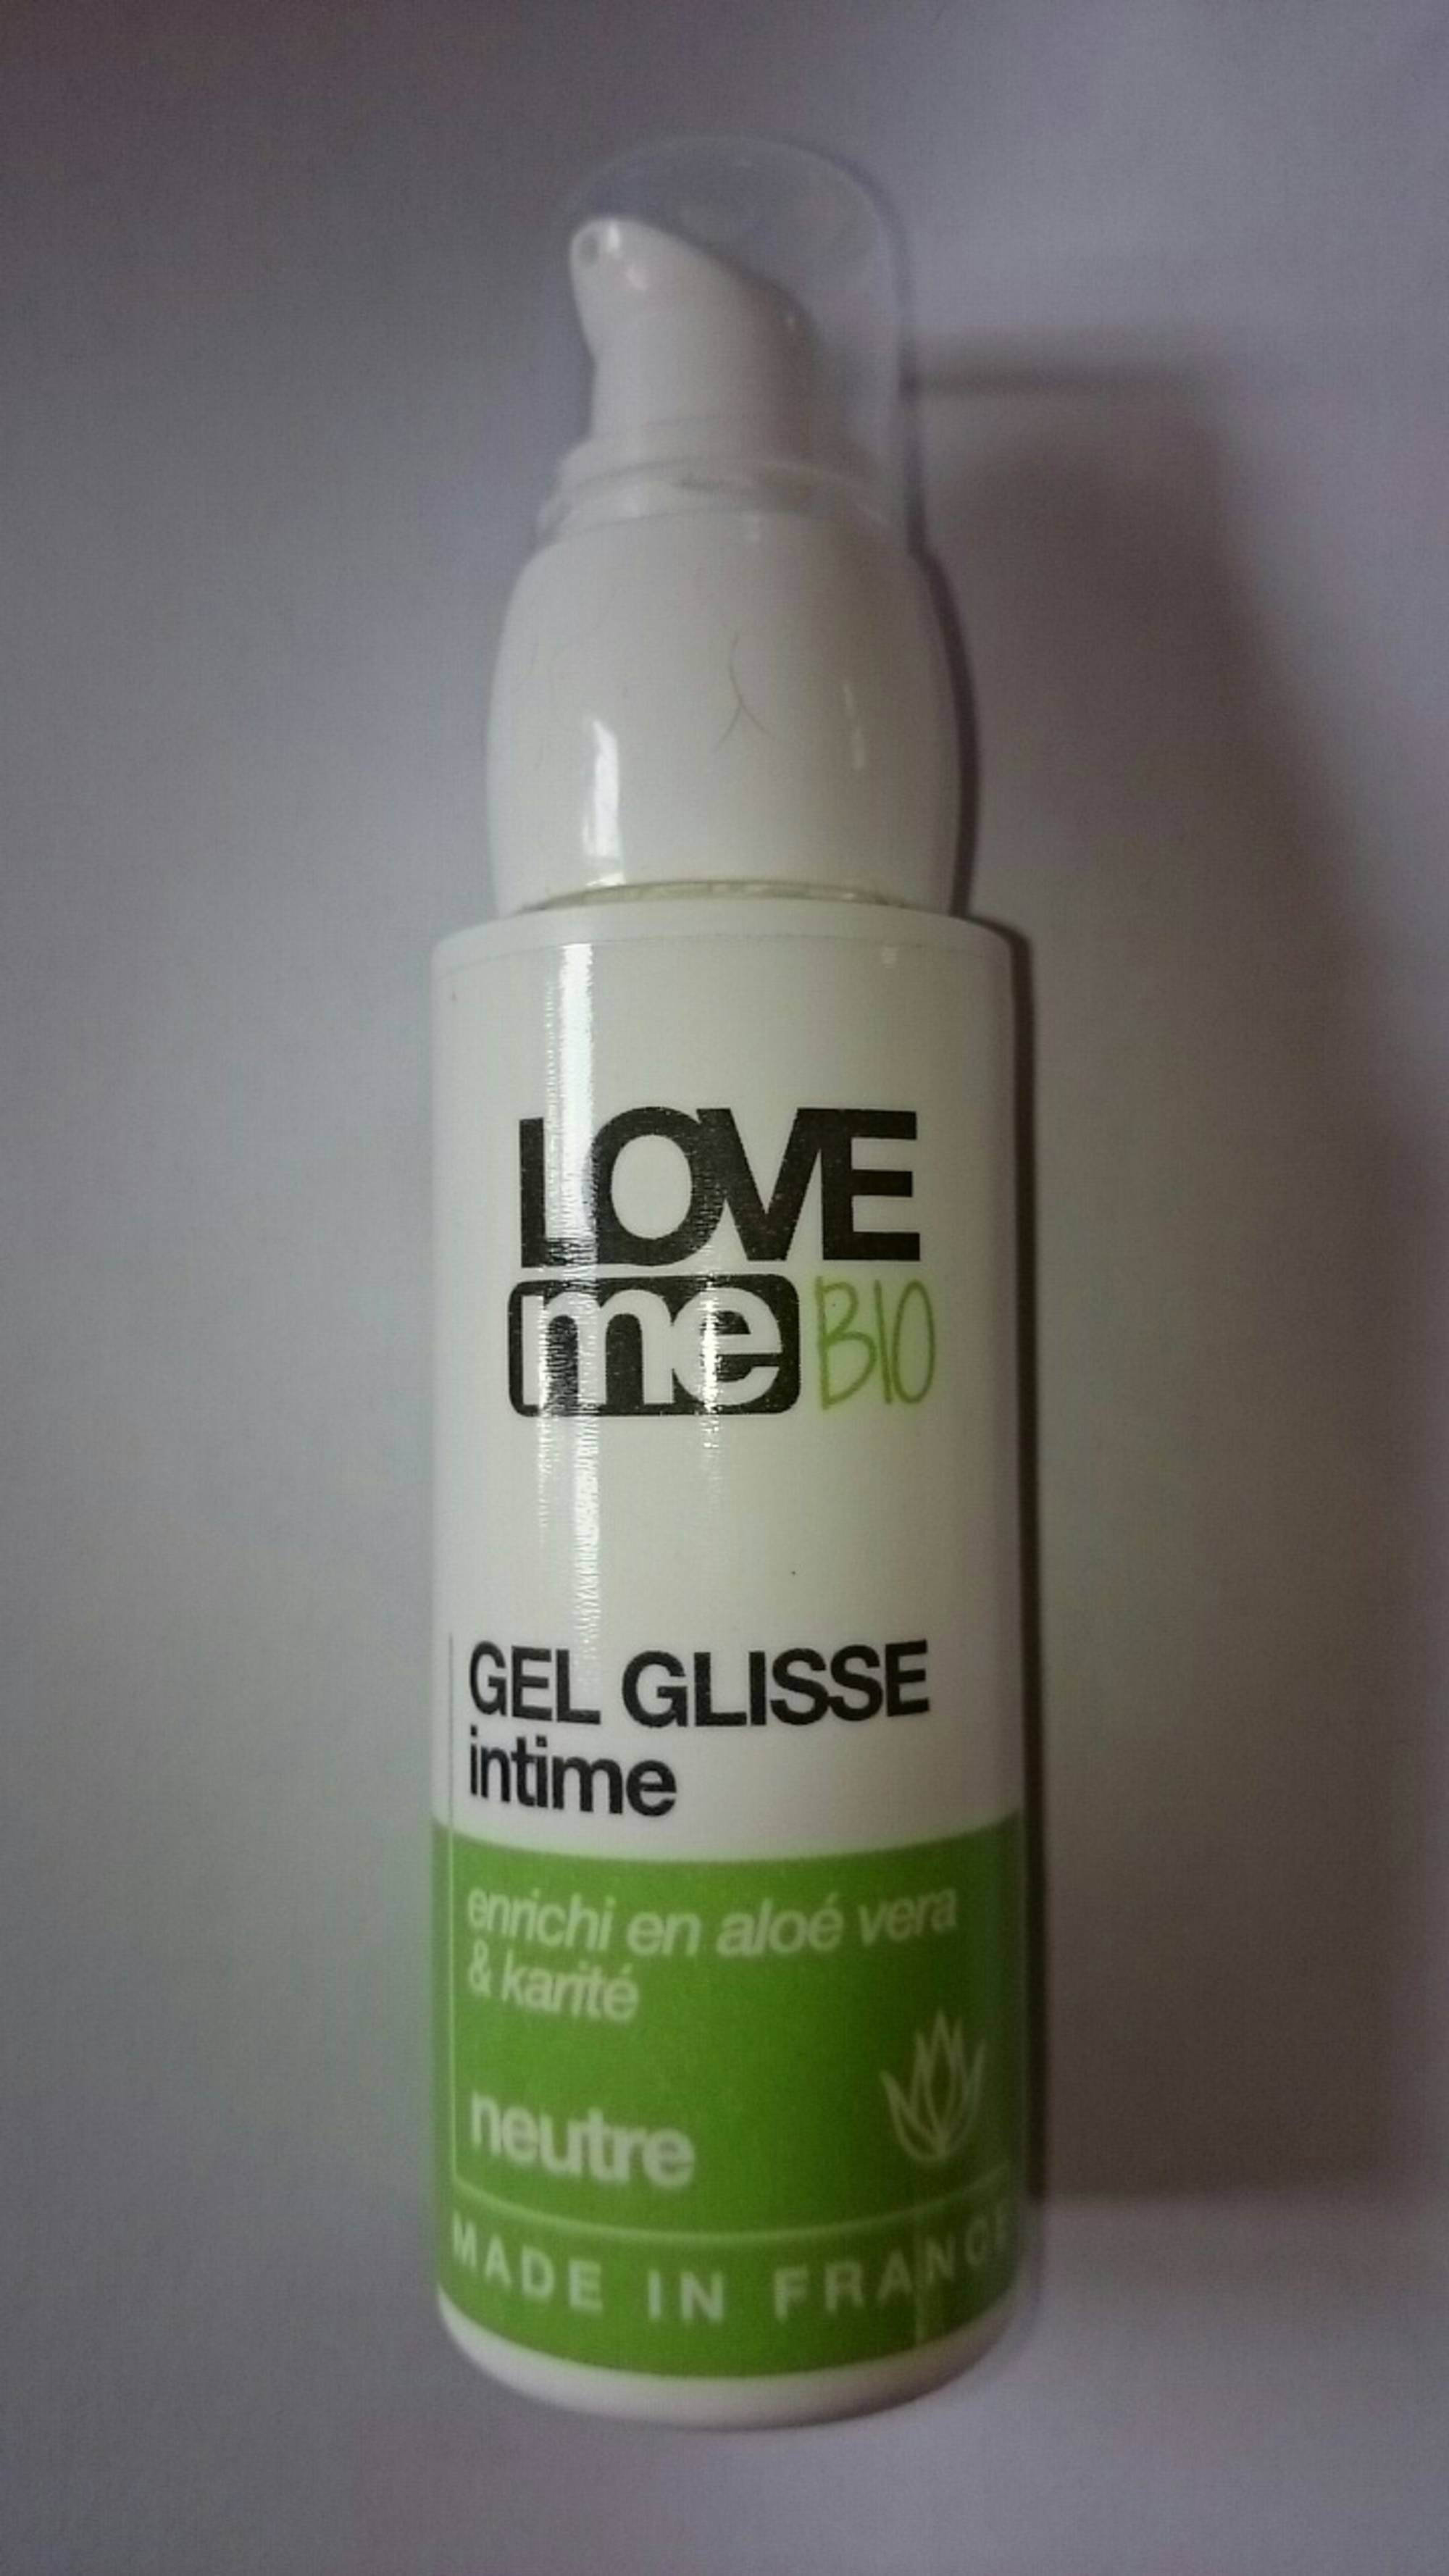 LOVE ME - Bio - Gel glisse intime